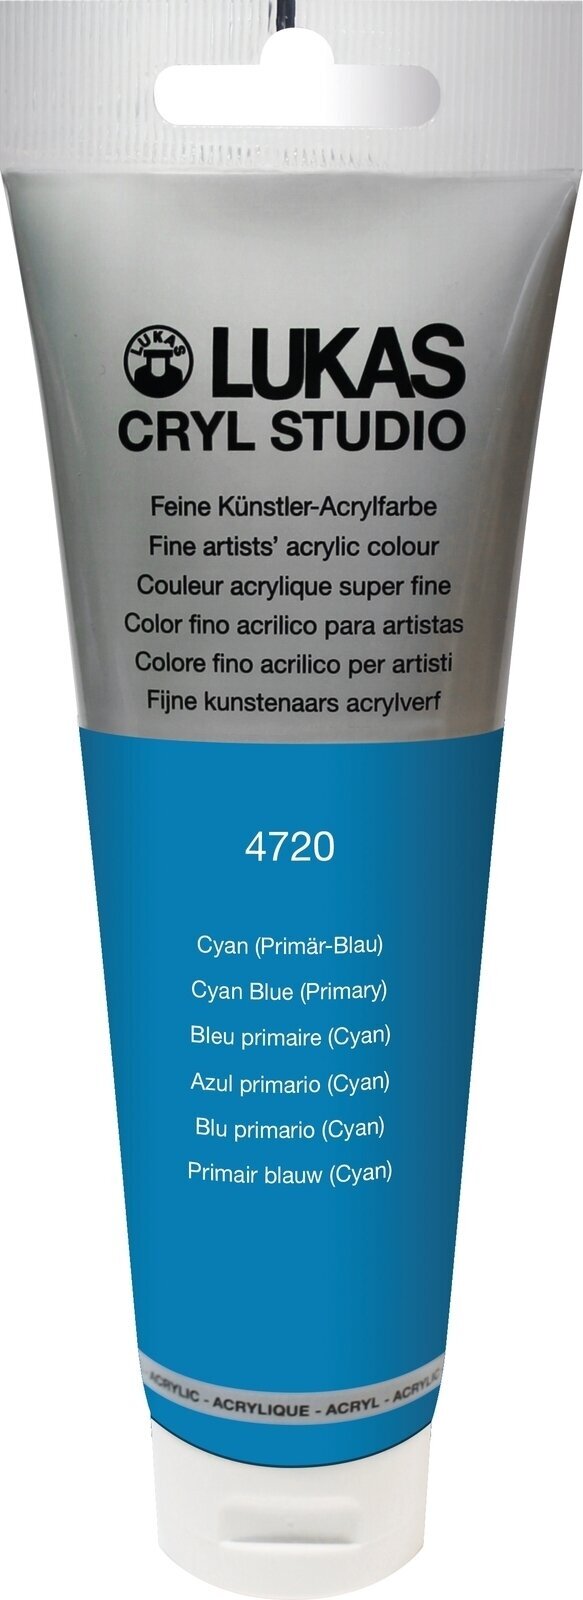 Akrylová farba Lukas Cryl Studio Acrylic Paint Plastic Tube Akrylová farba Cyan Blue (Primary) 125 ml 1 ks